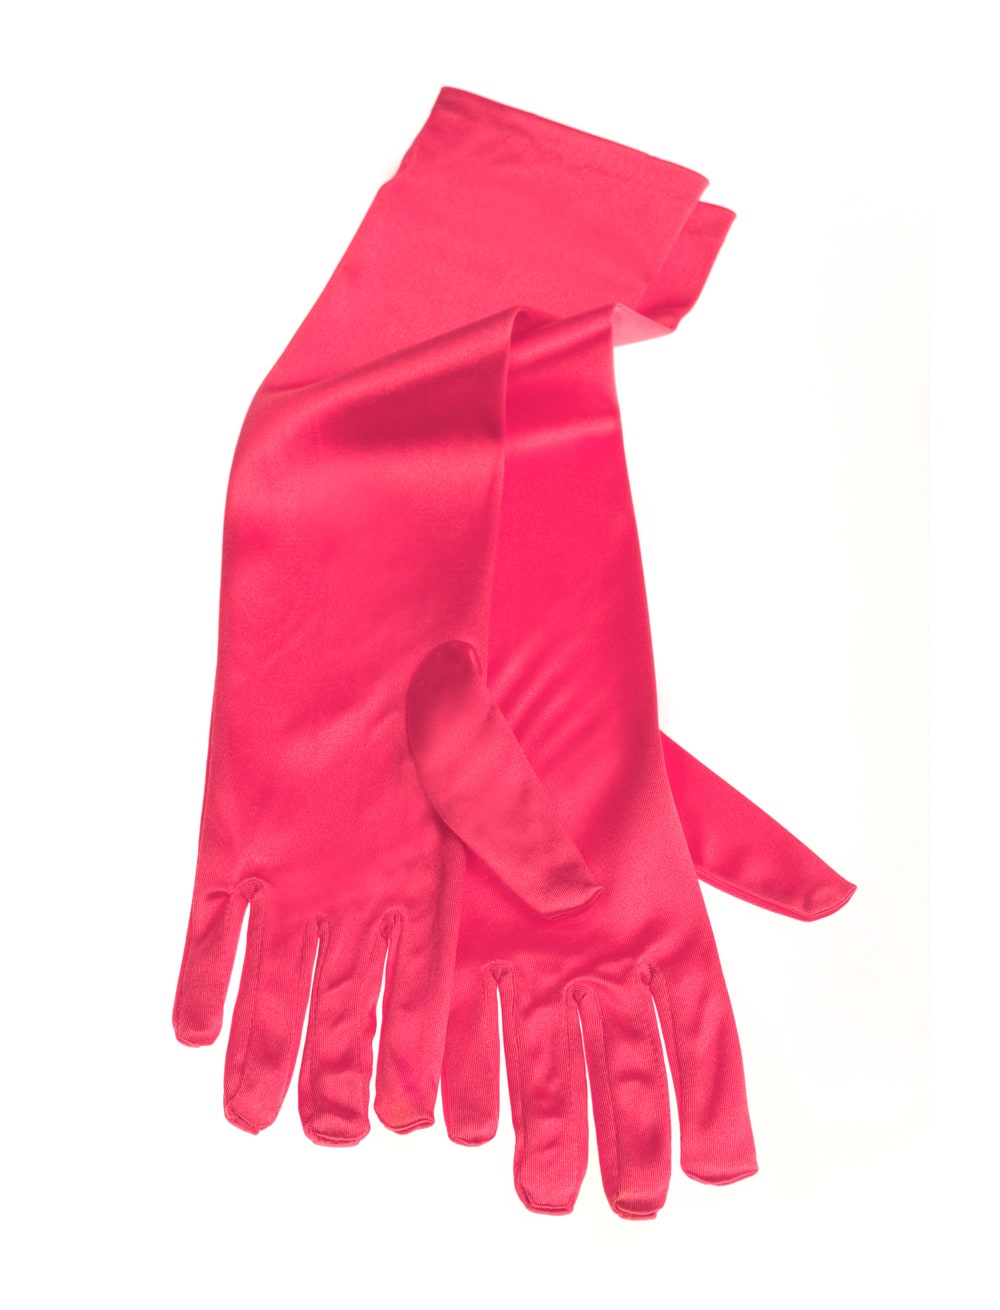 Handschuhe Satin 40cm pink one size